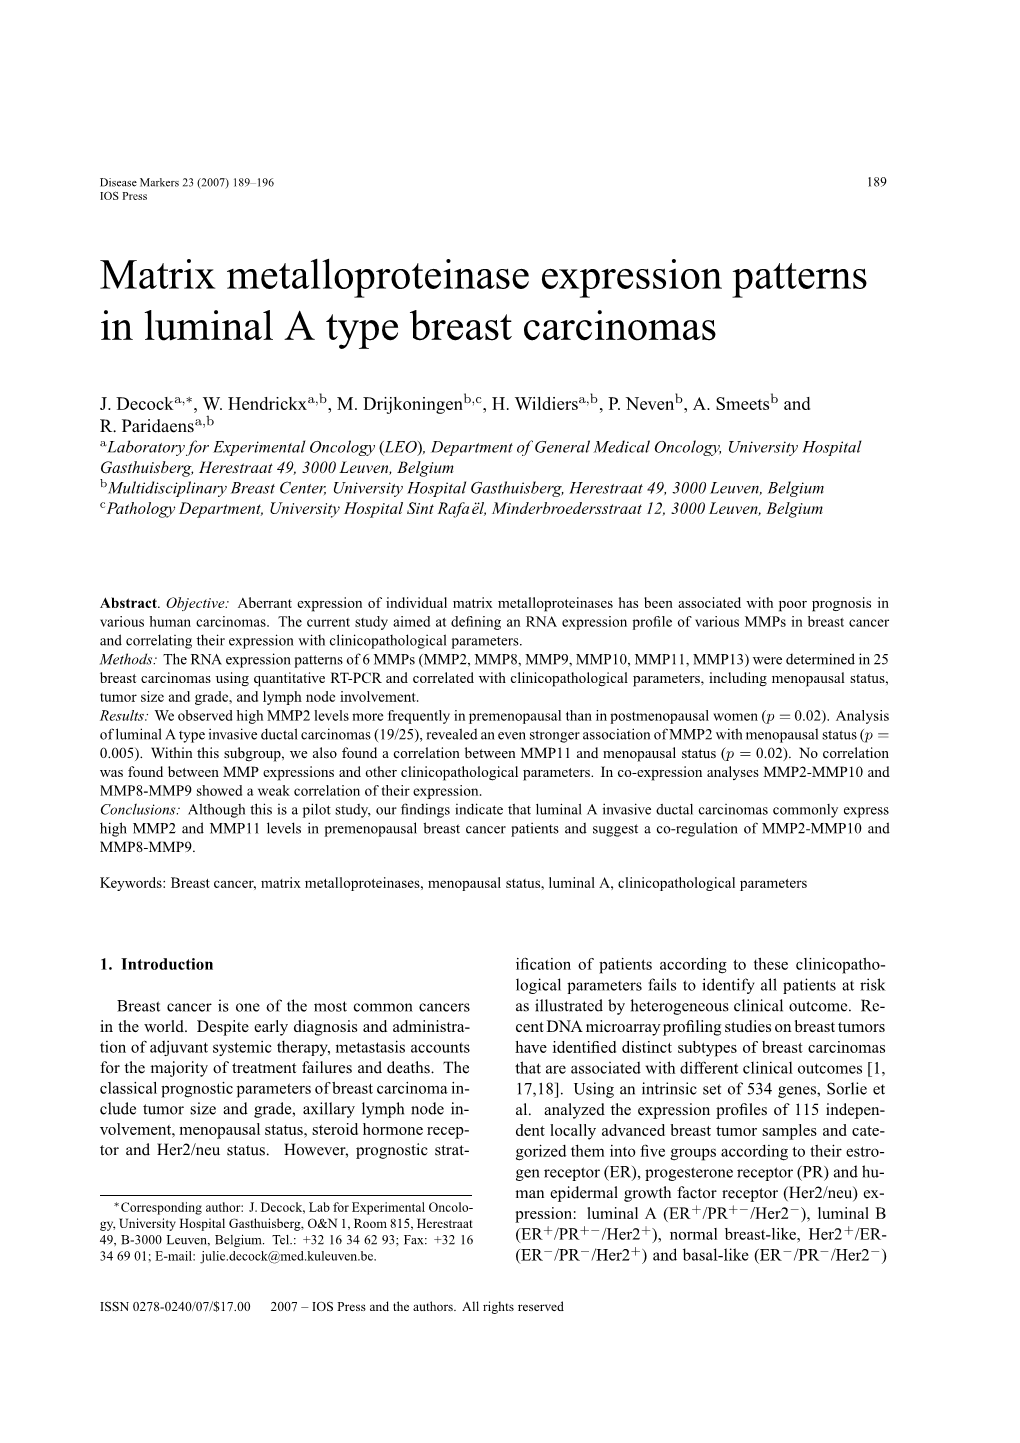 Matrix Metalloproteinase Expression Patterns in Luminal a Type Breast Carcinomas